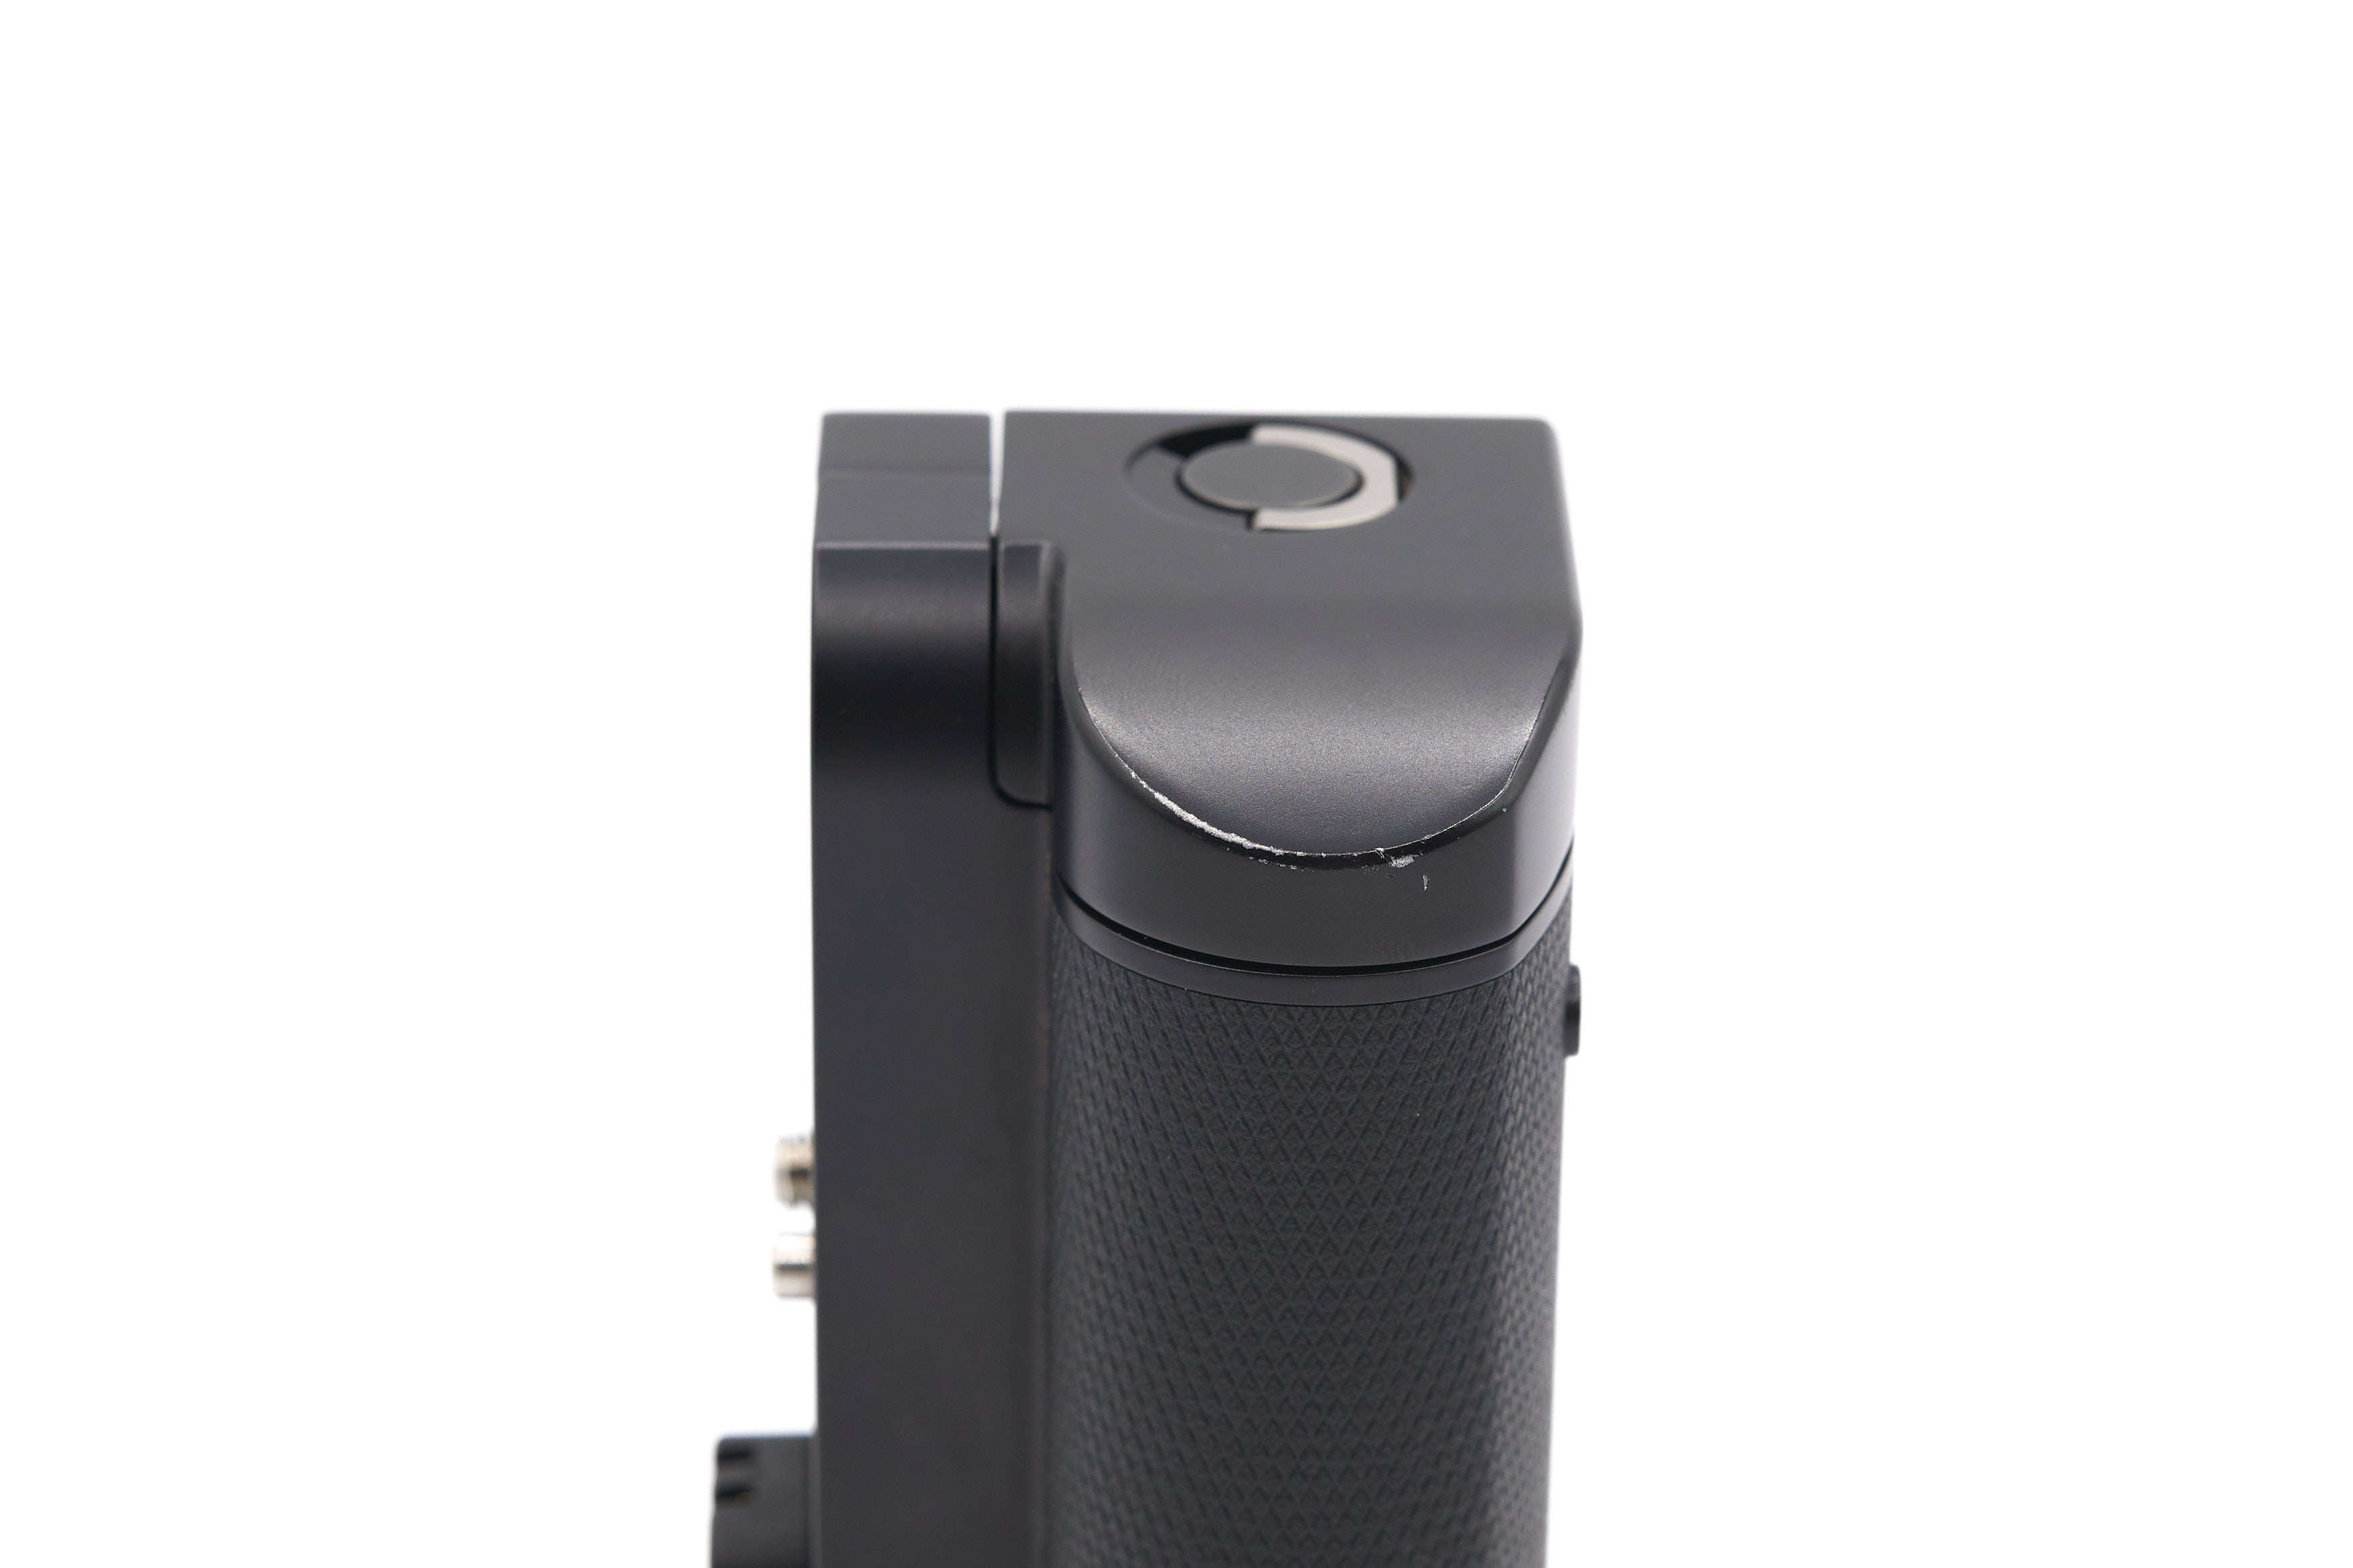 Leica Multifunctional Handgrip HG-SCL4 16063